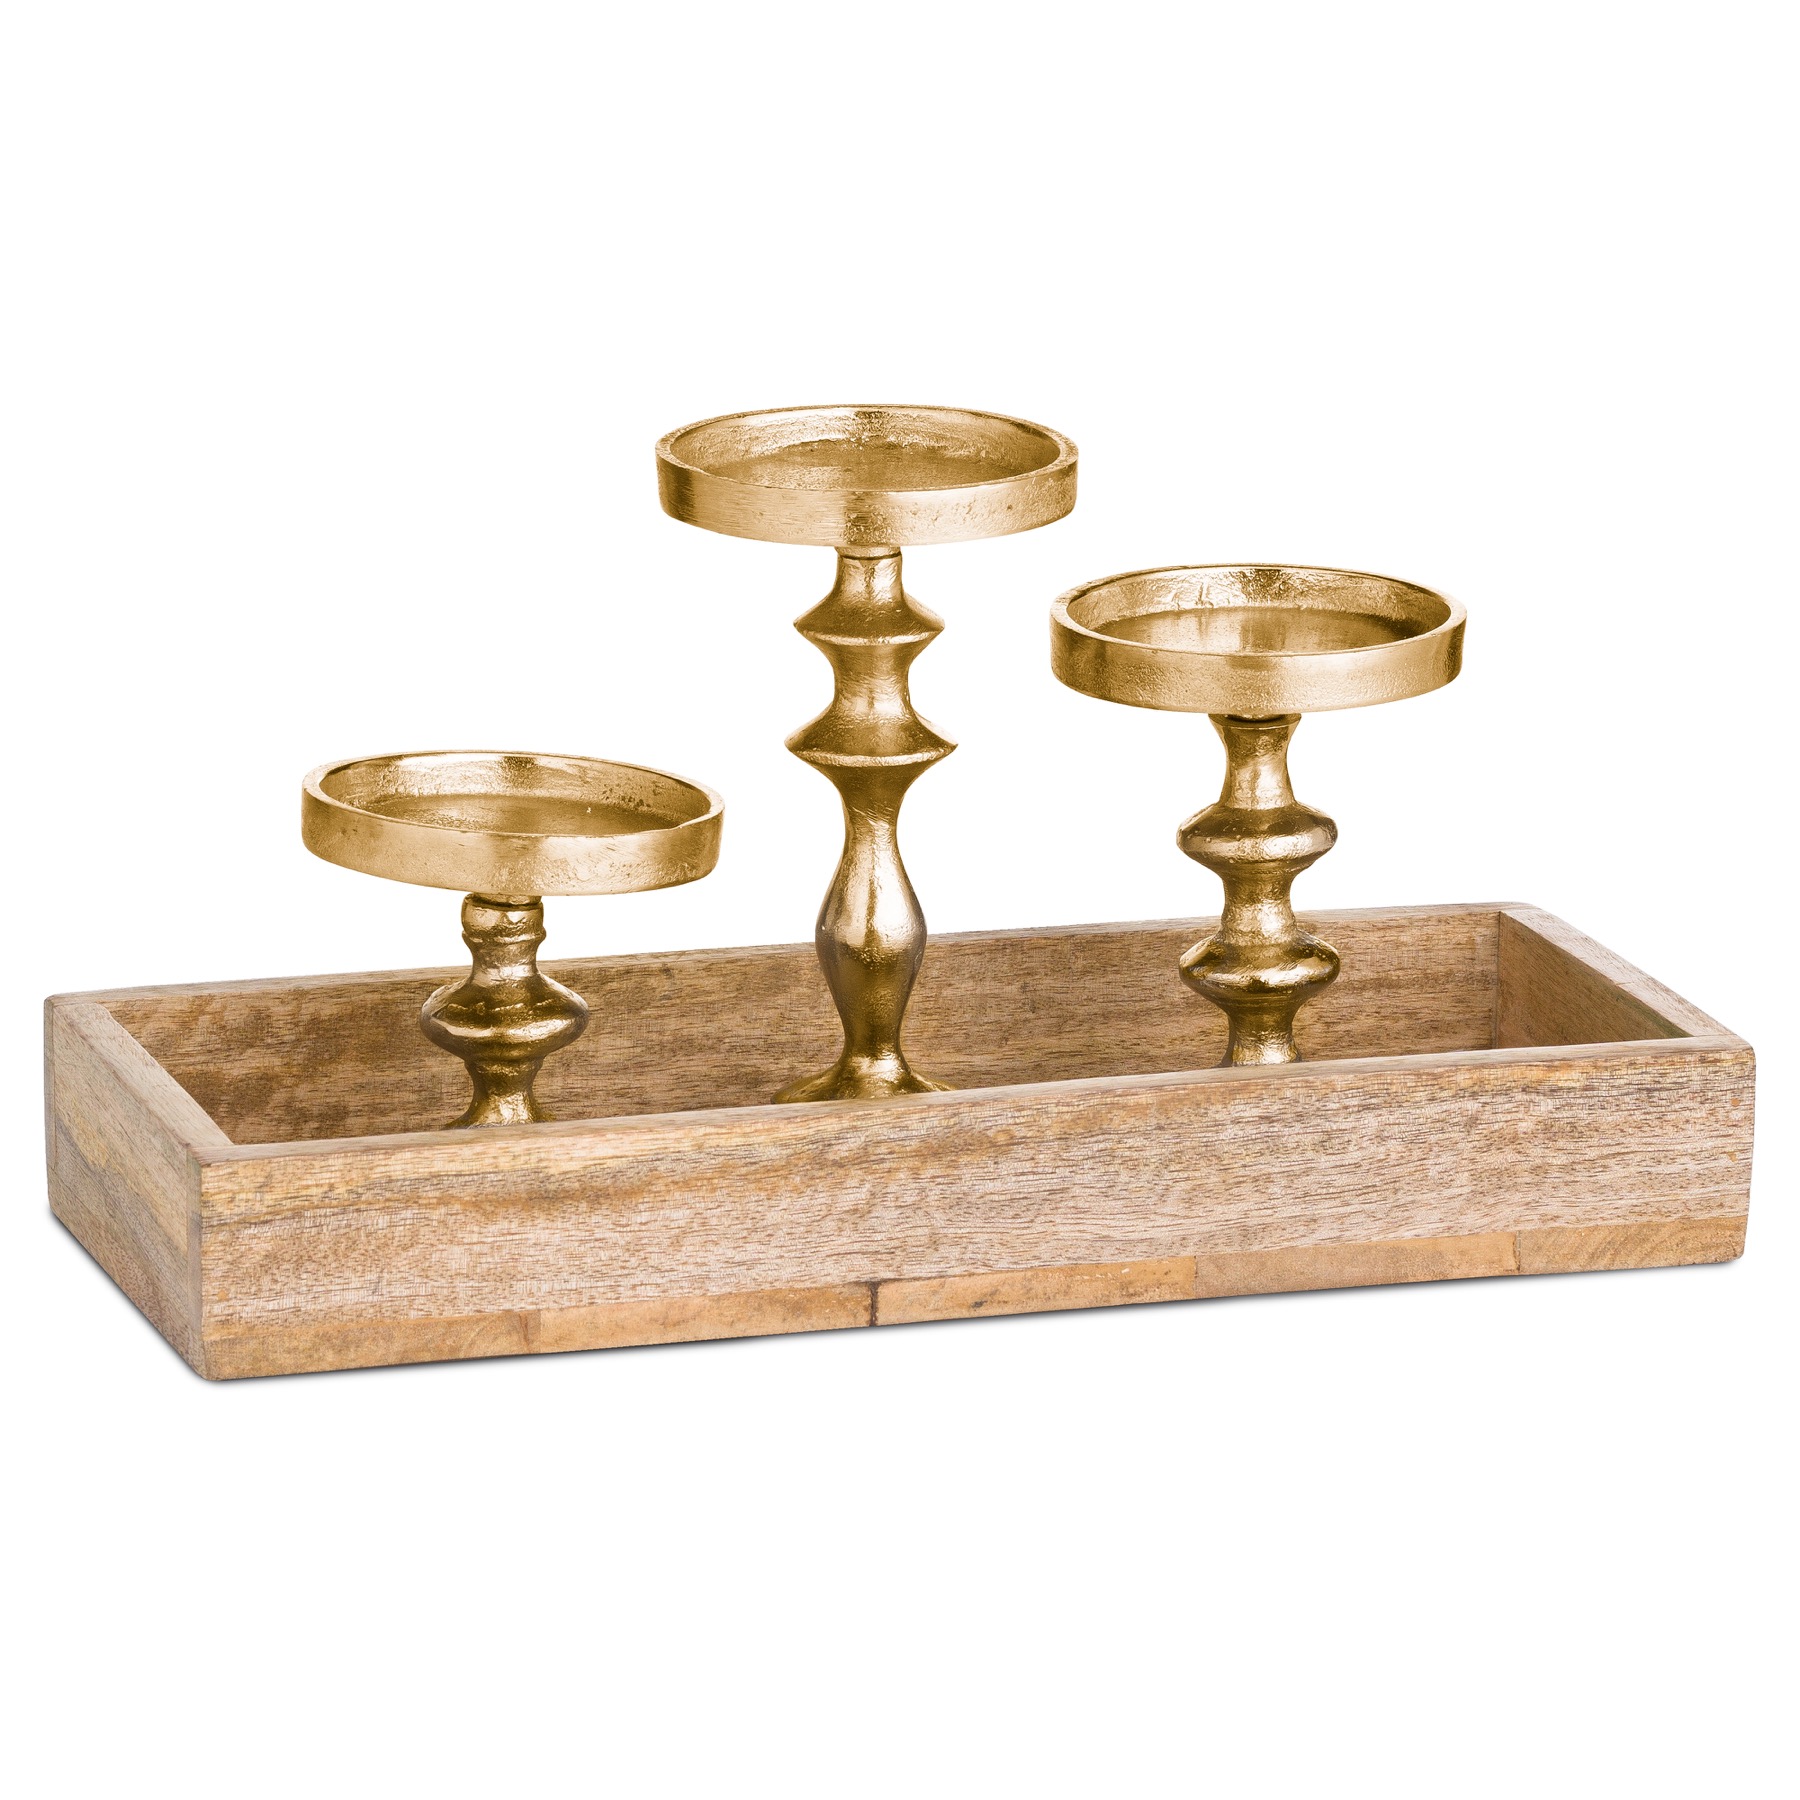 Hardwood Display Tray With Three Candle Holders - Image 1